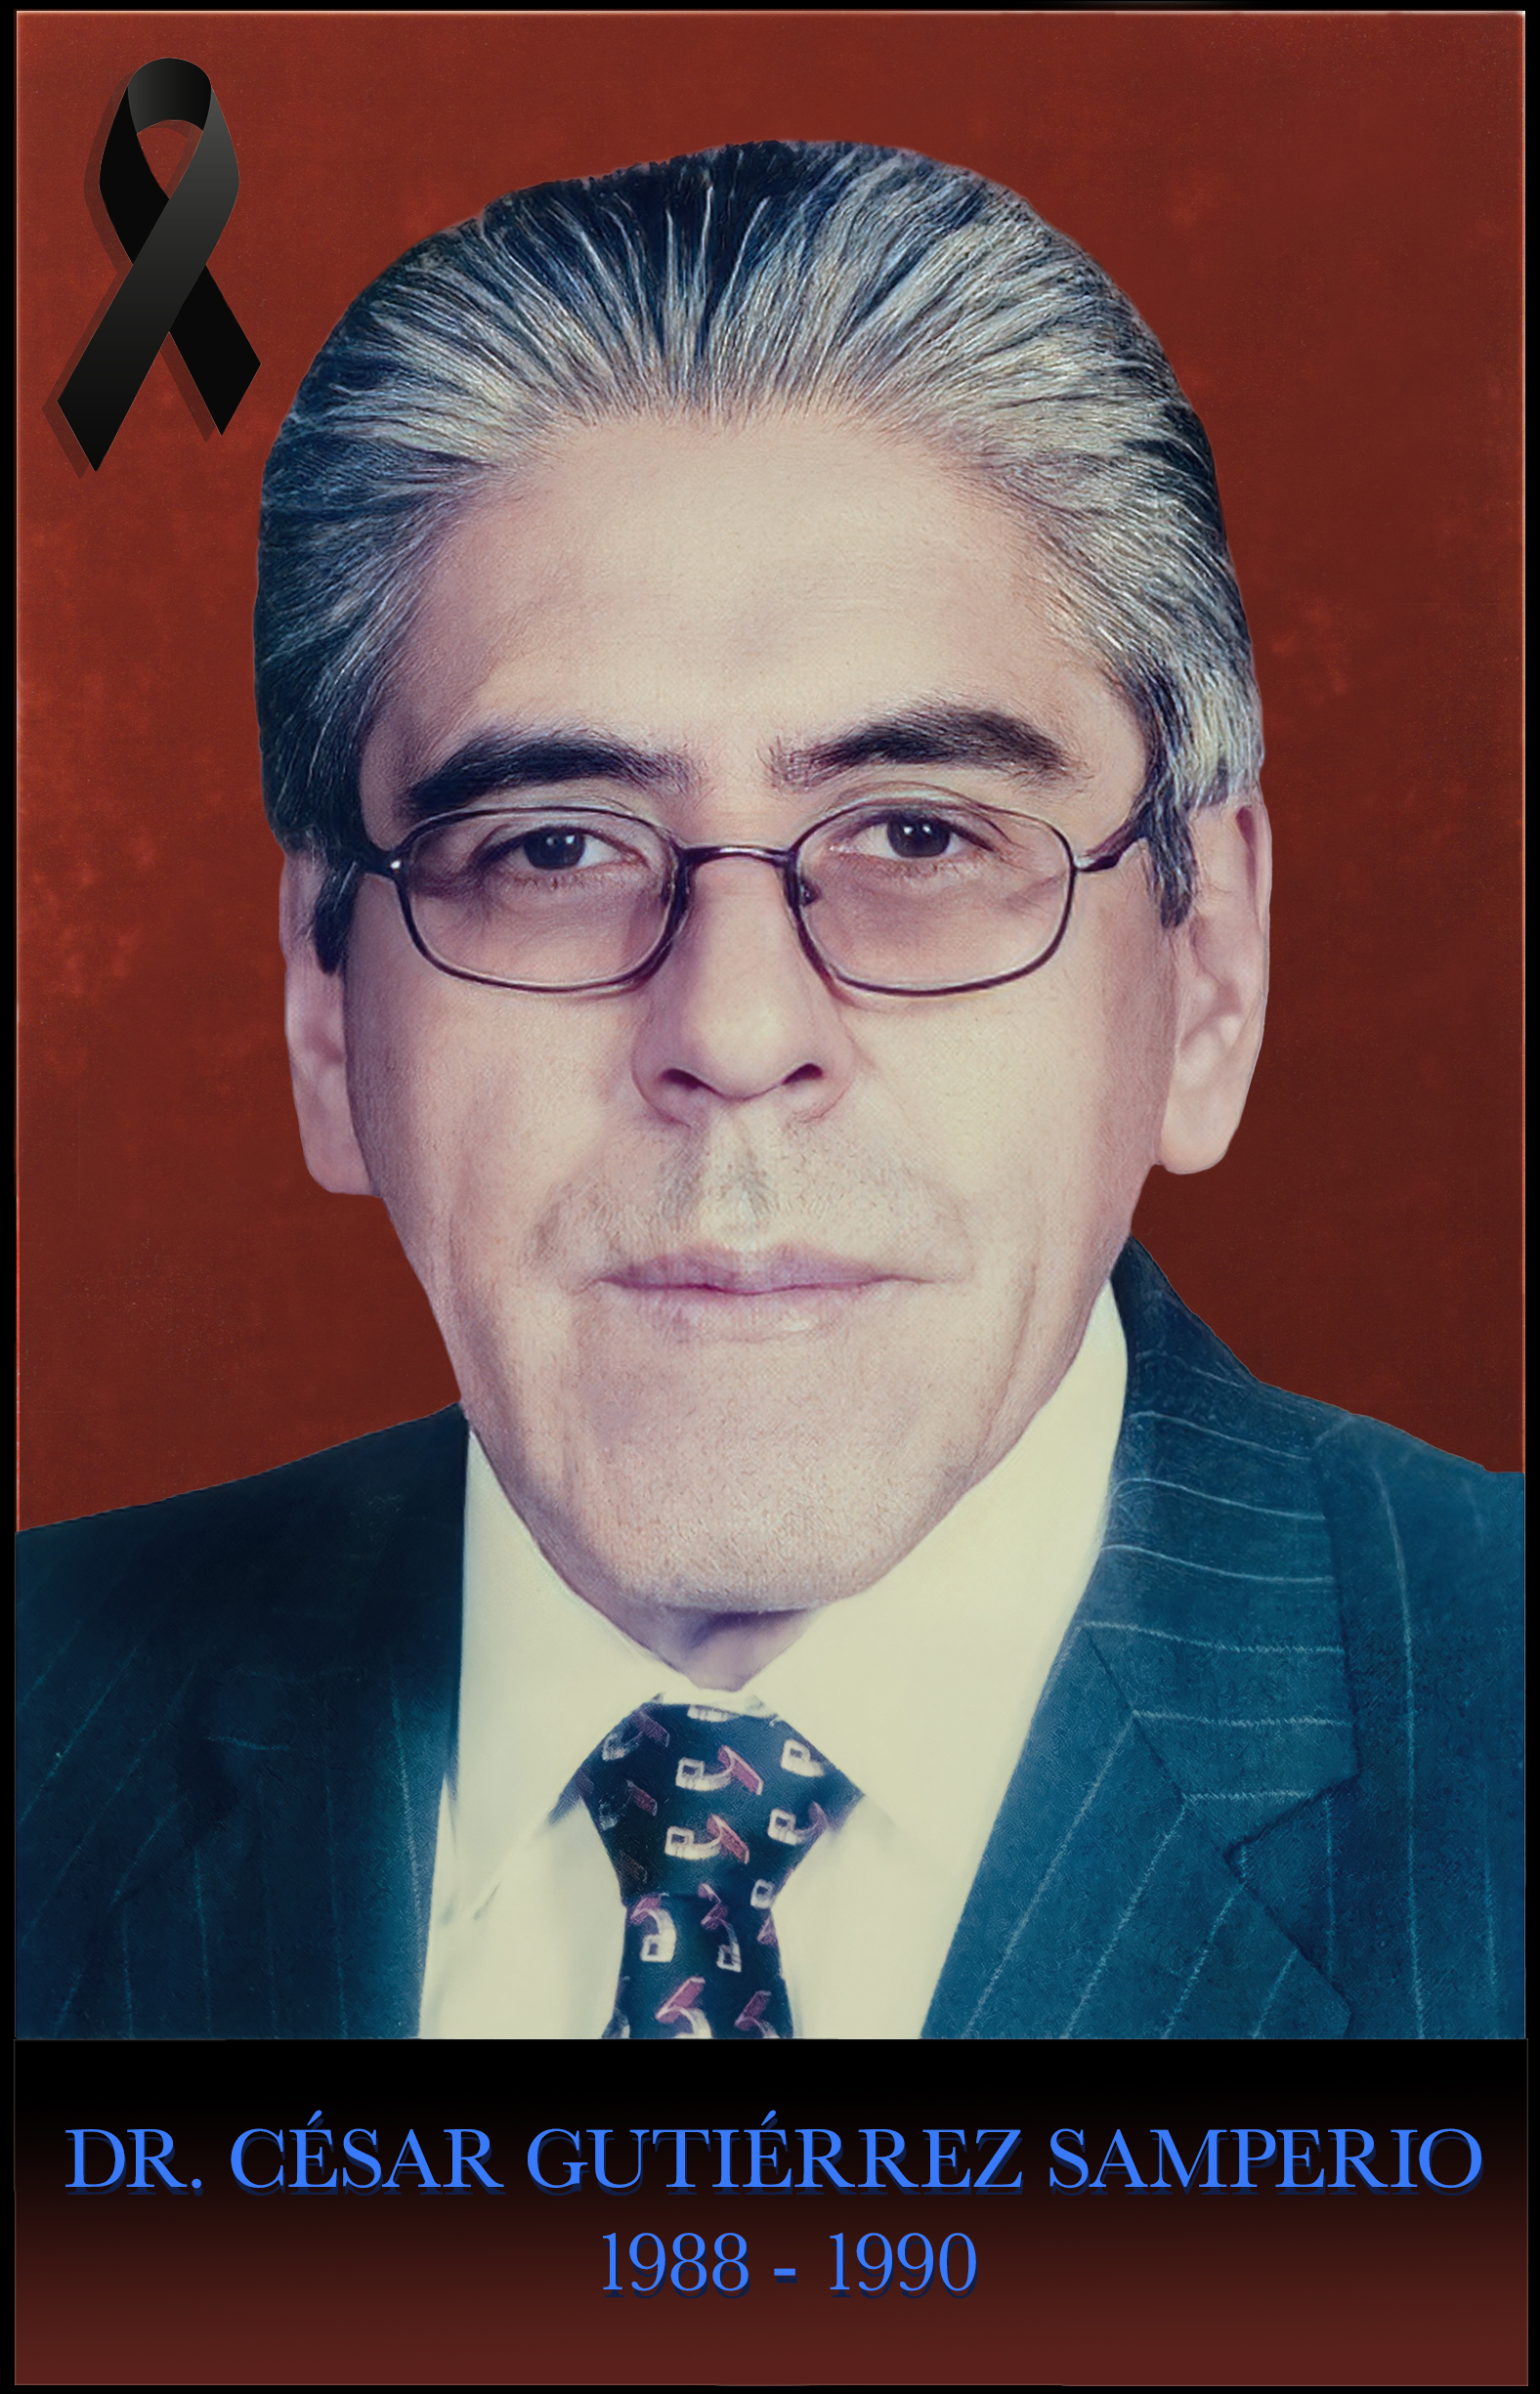 Dr. César Gutiérrez Samperio